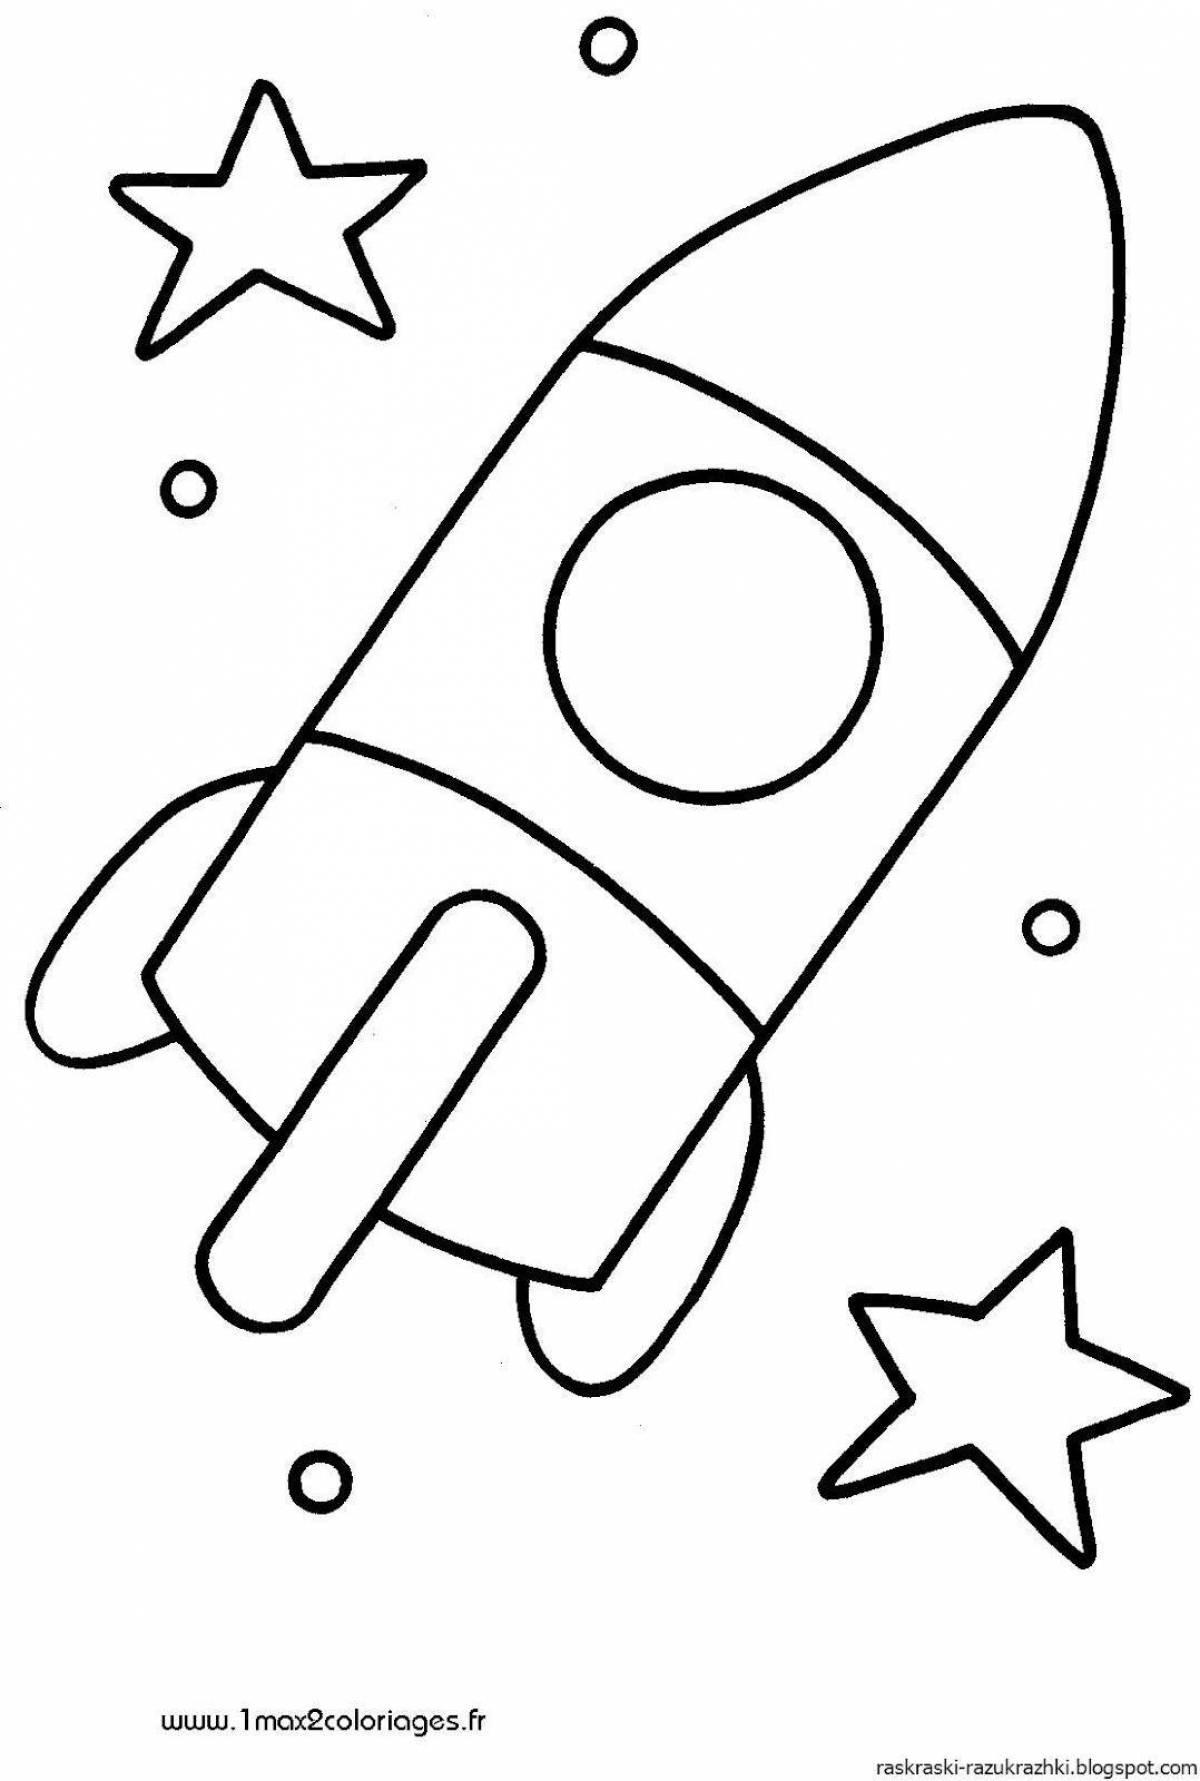 Забавная раскраска ракеты для детей 5-6 лет